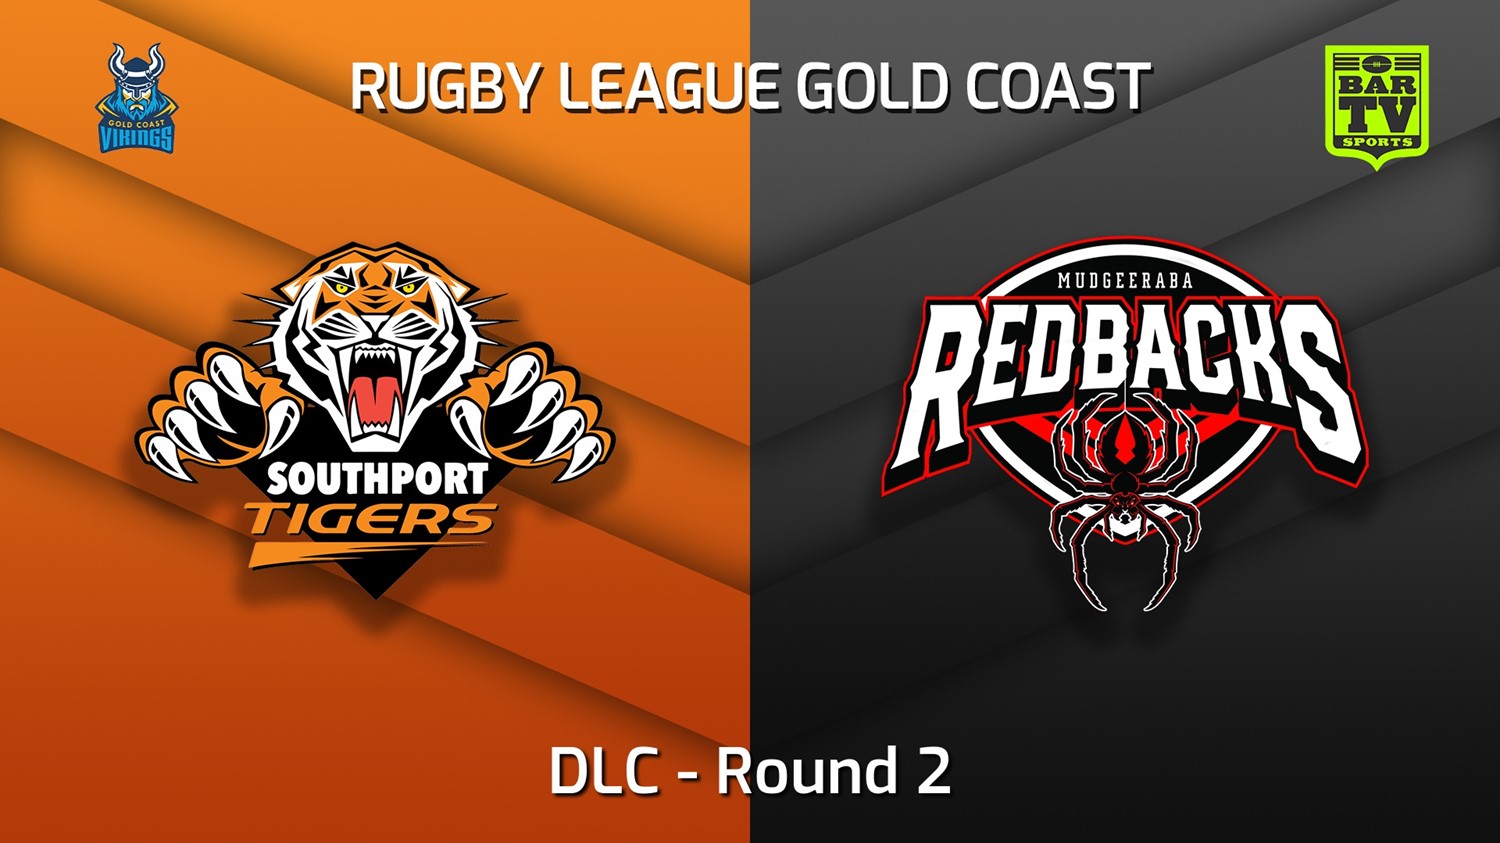 220403-Gold Coast Round 2 - DLC - Southport Tigers v Mudgeeraba Redbacks Slate Image